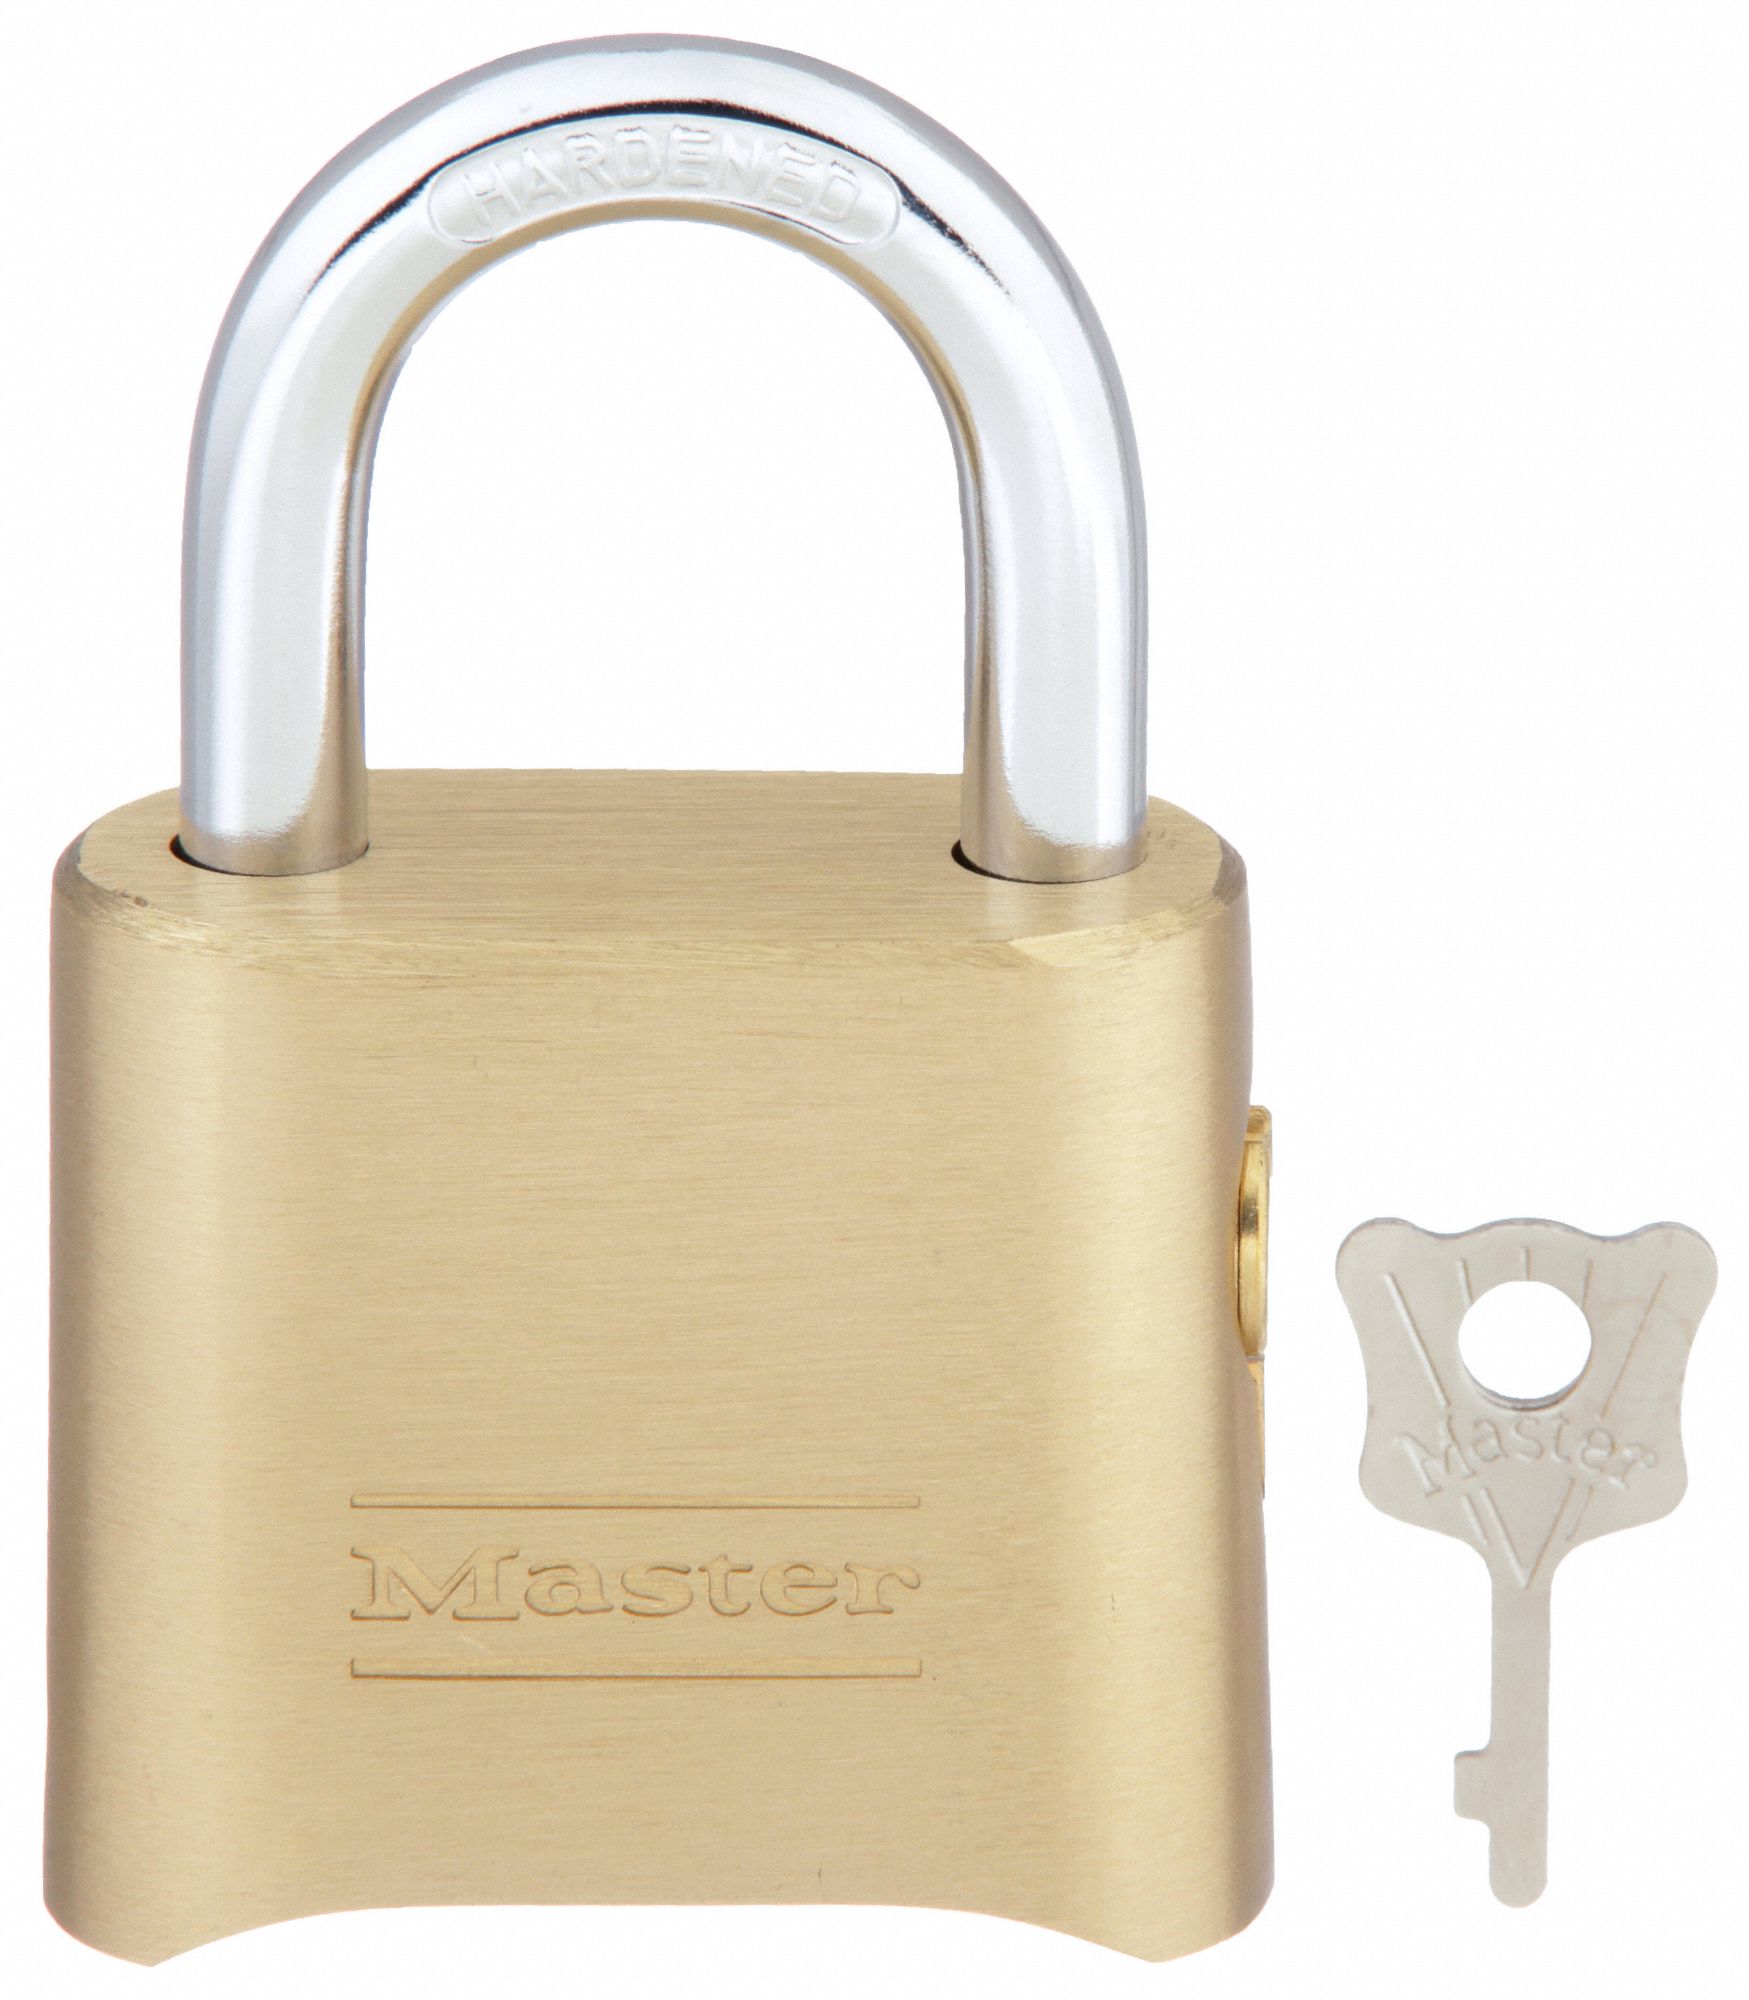 Mini Metal Lock - Zinc Replacement Silver Pad-Lock with 3 Keys of